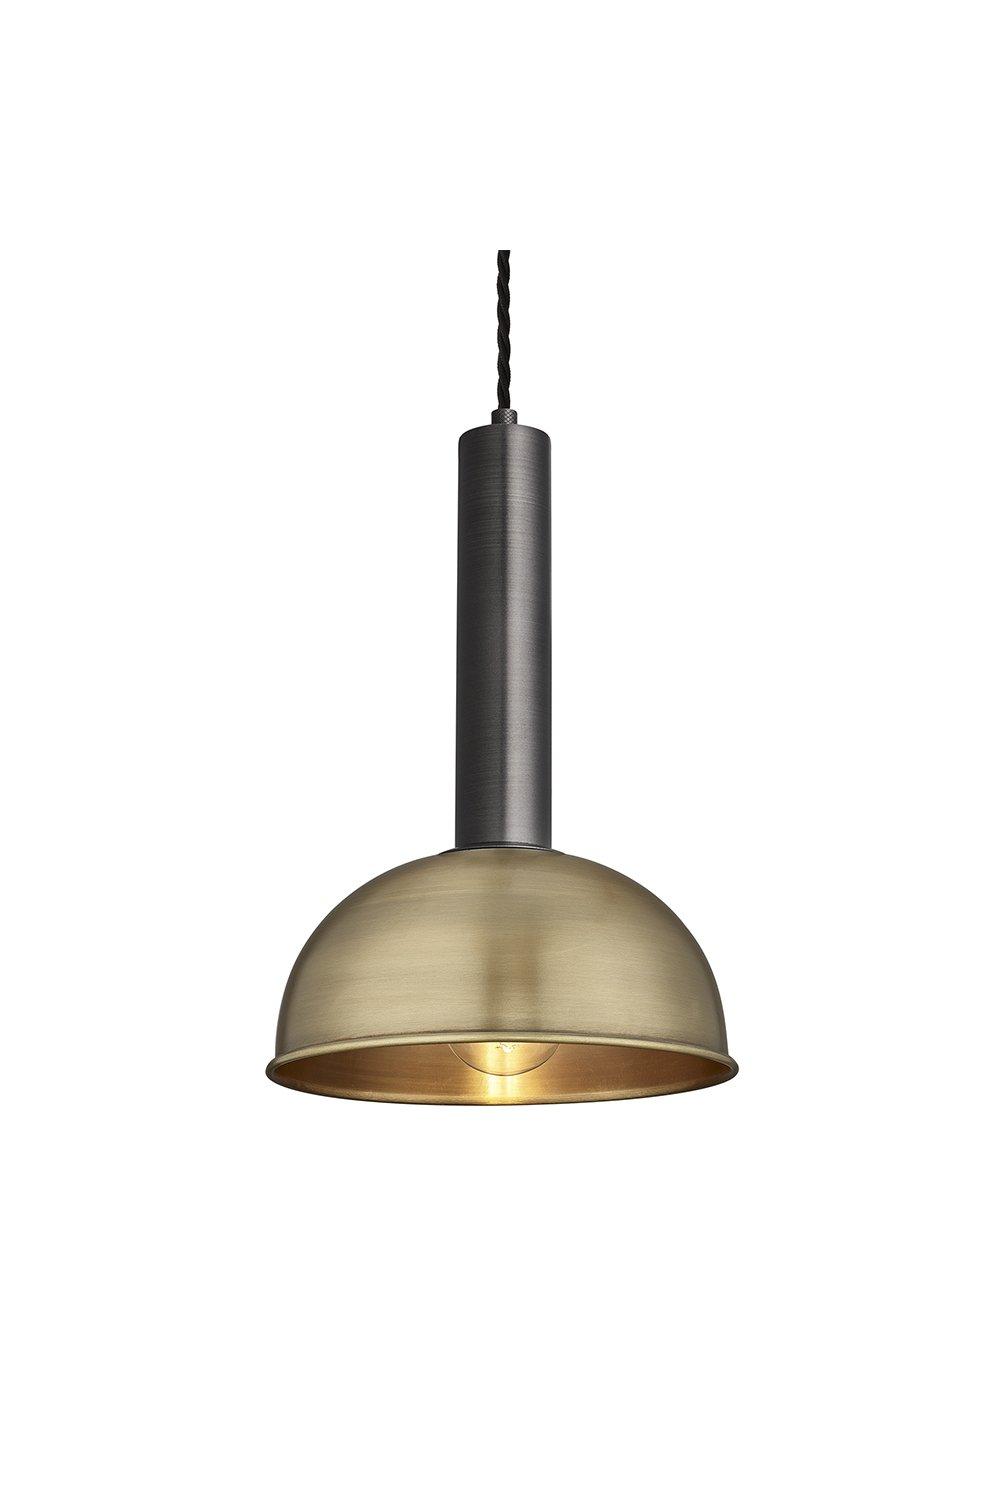 Sleek Cylinder Dome Pendant Light, 8 Inch, Brass, Pewter Holder